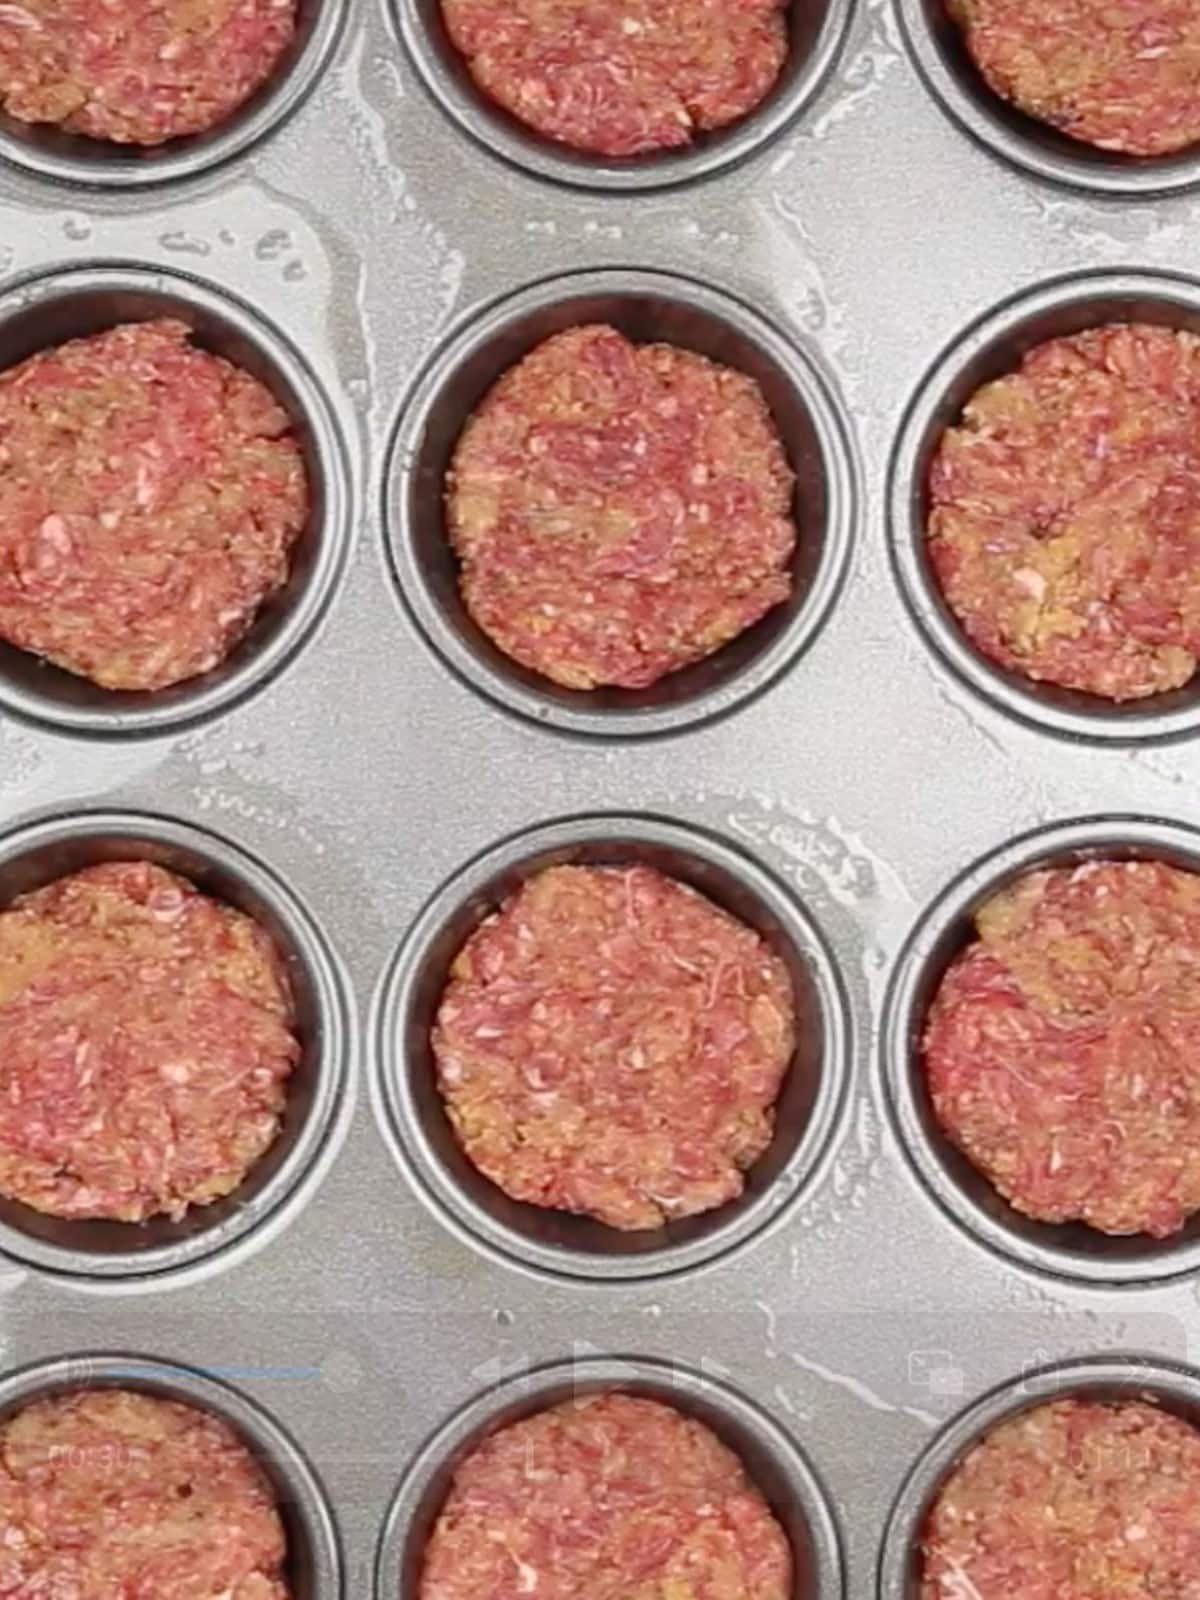 The mini meatloafs in the prepared muffin tin.